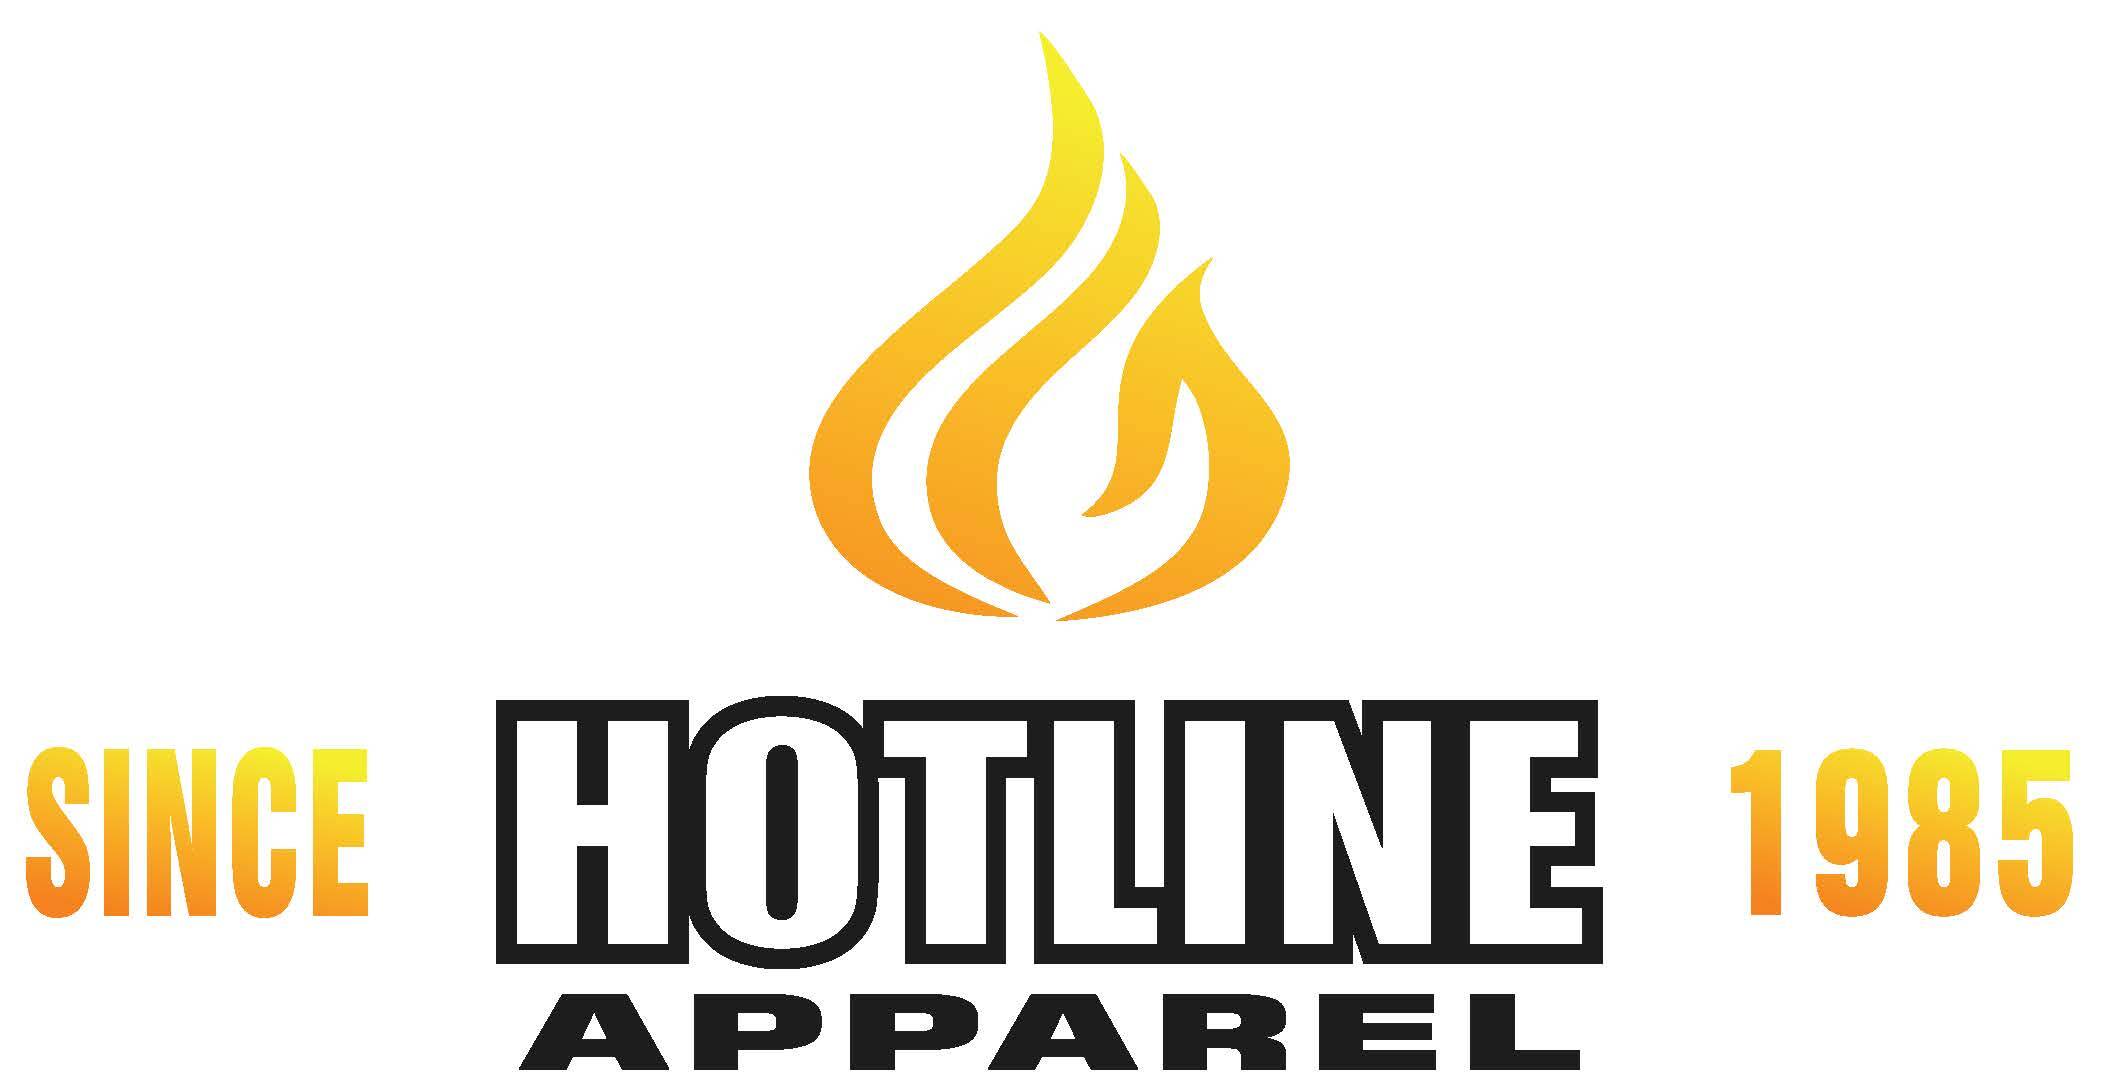 Hotline Apparel